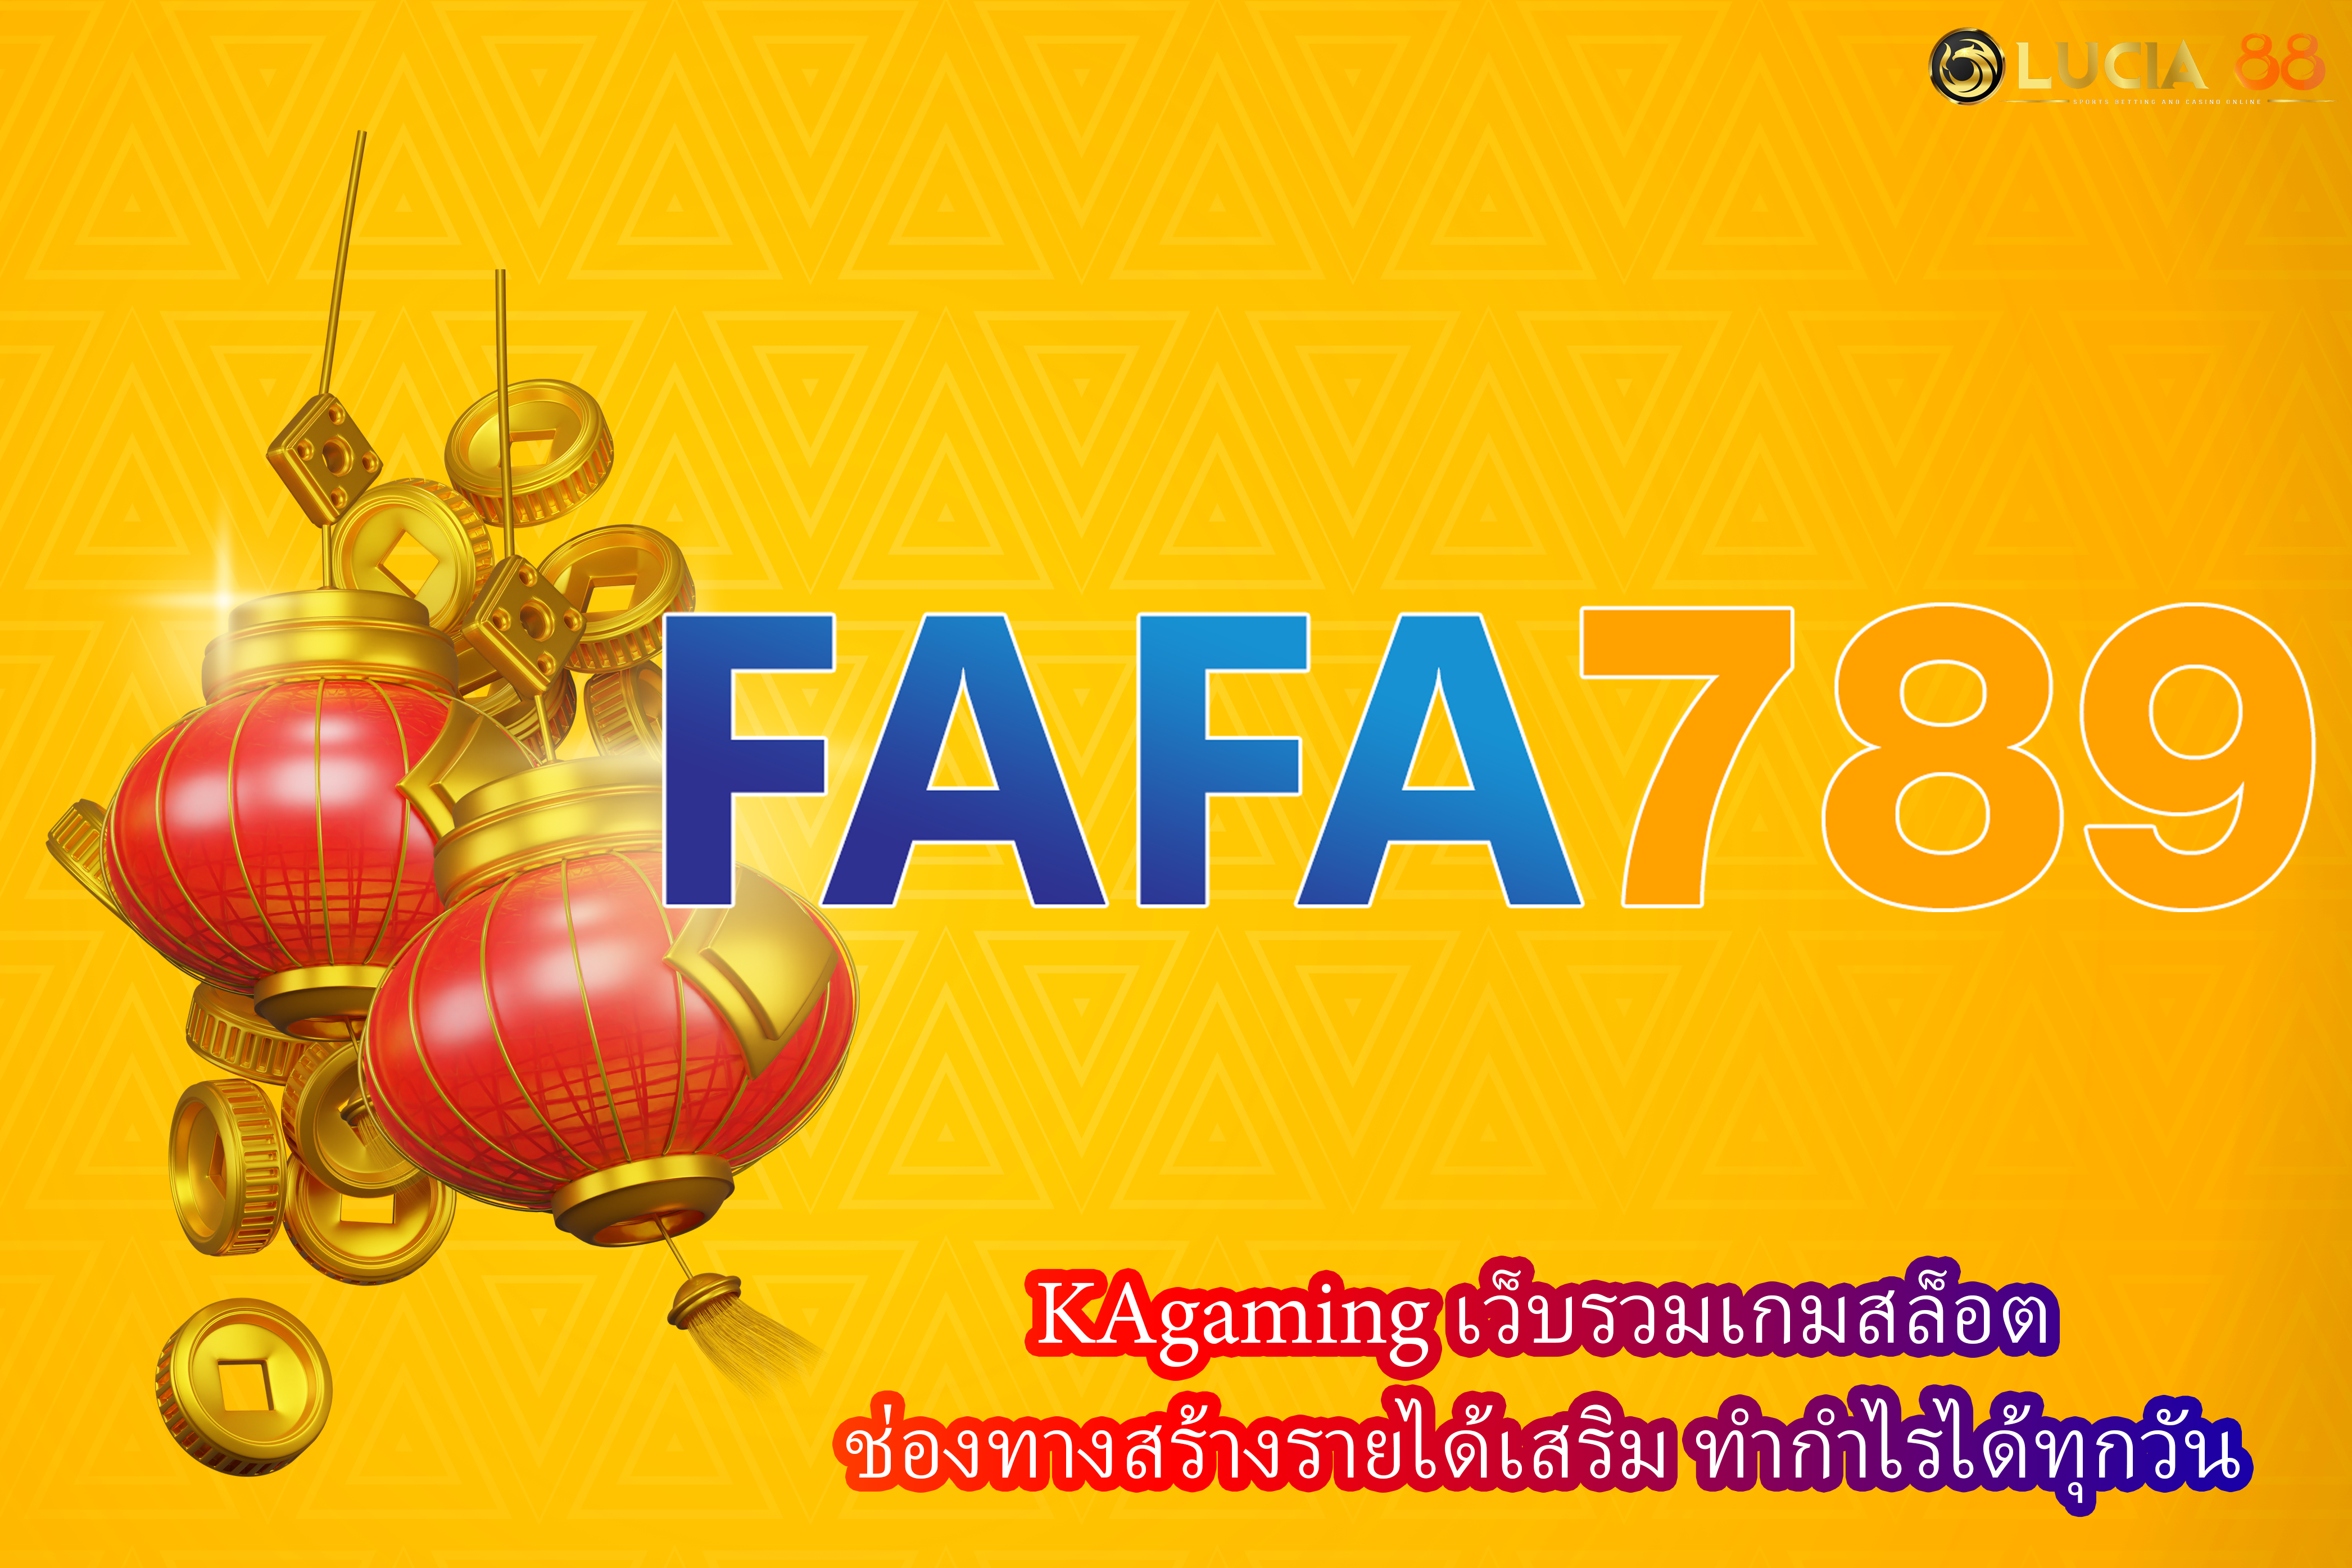 FAFA789 เว็บเกมสล็อตยอดฮิต เล่นง่าย กำไรสูง ปลอดภัย มือใหม่ก็เล่นได้